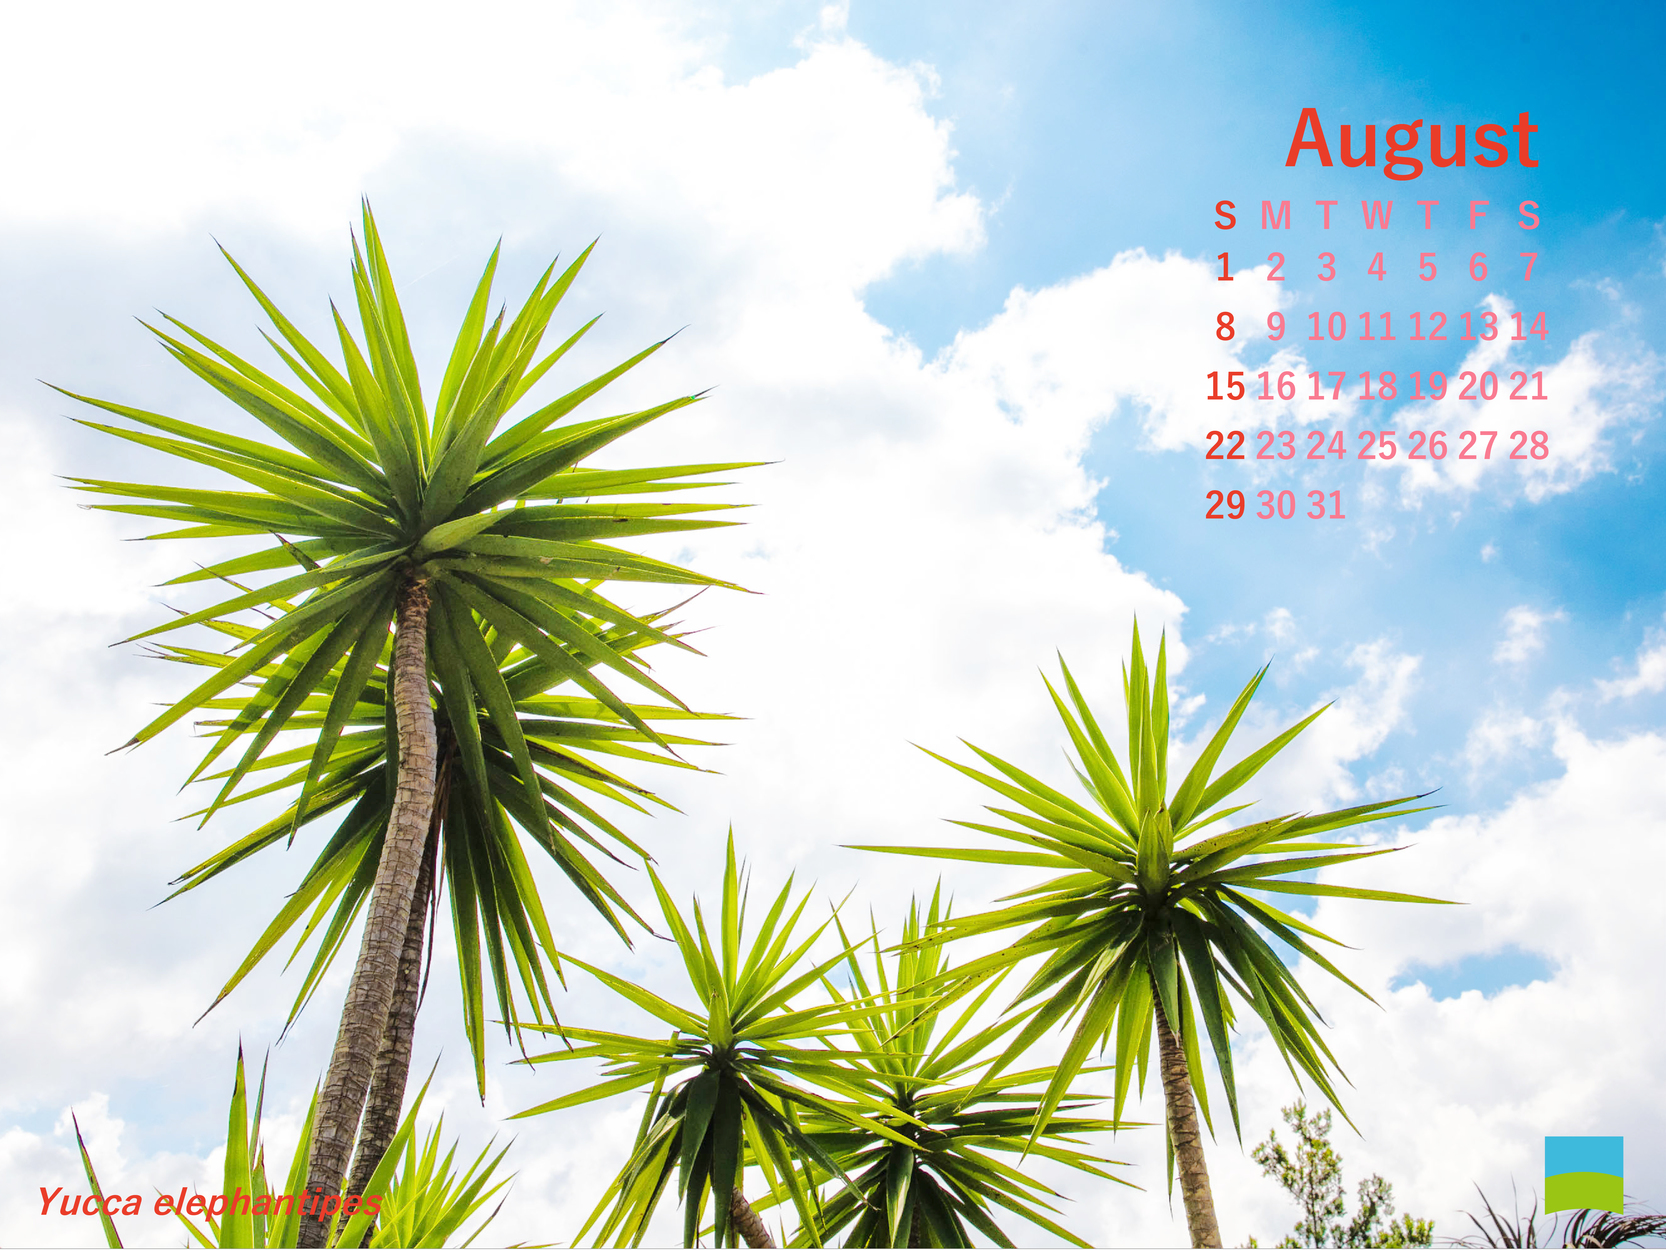 【PC用カレンダー壁紙】【8月】Yucca elephantipes